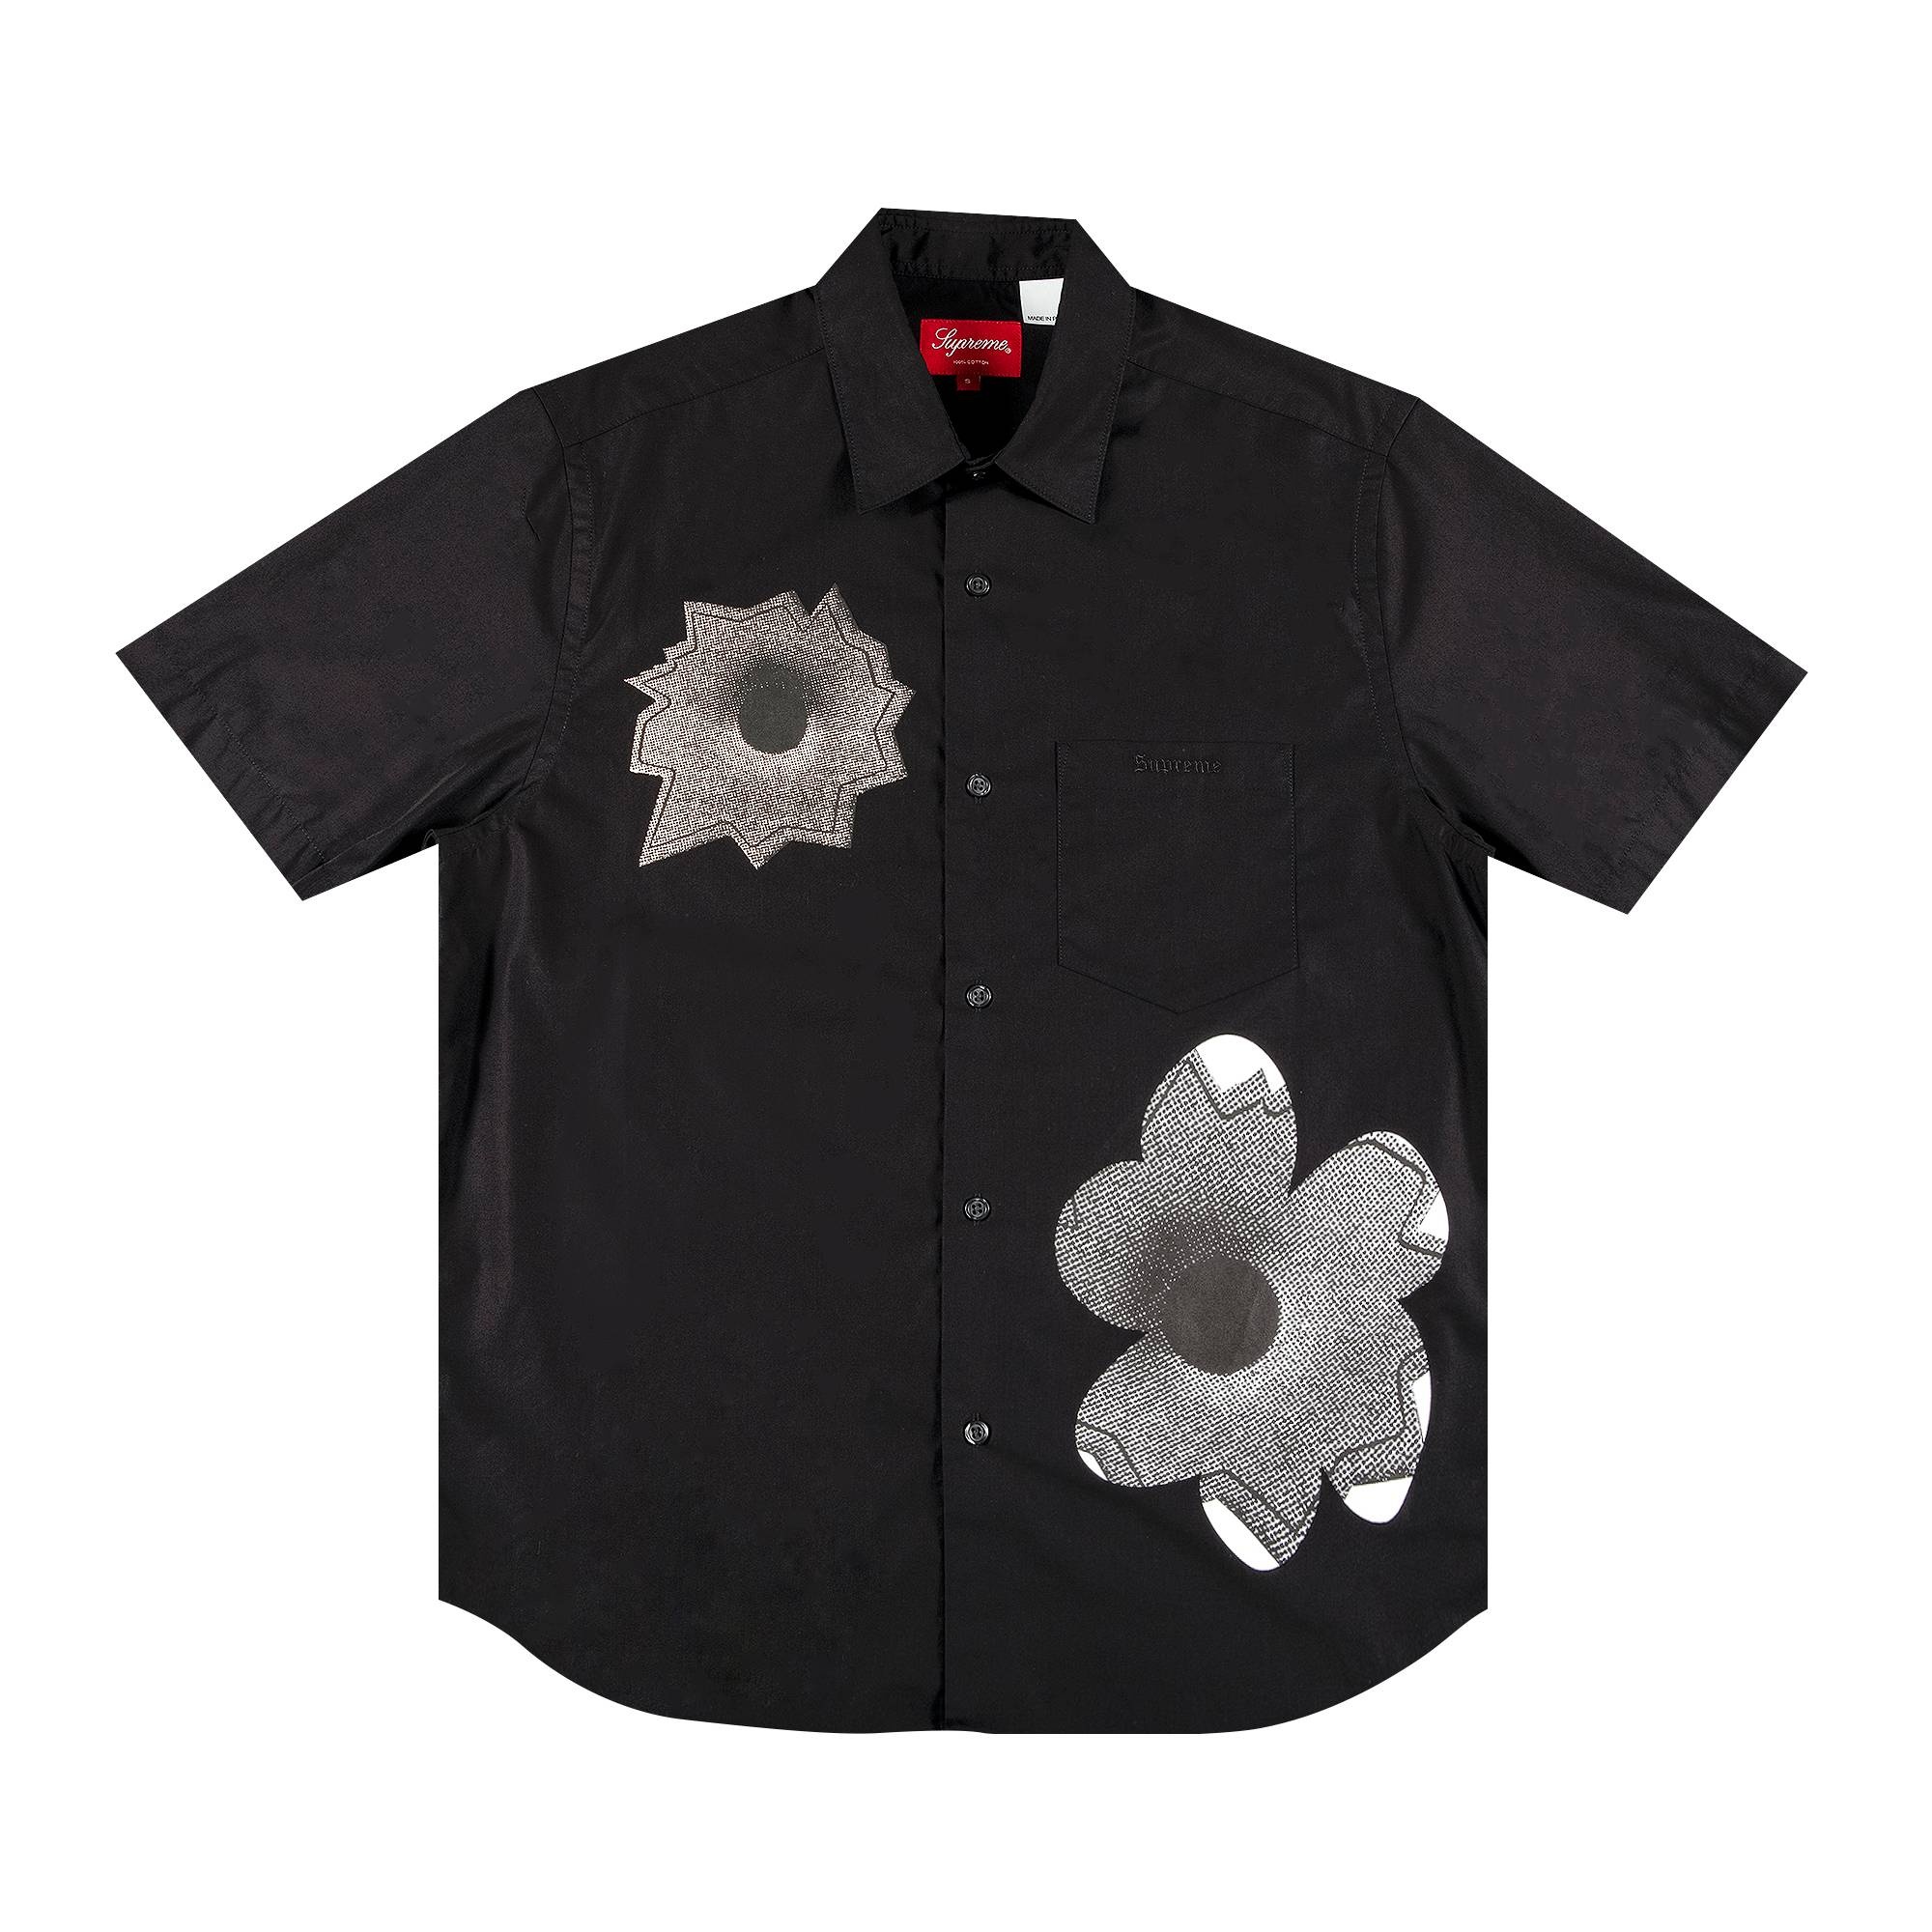 Supreme x Nate Lowman Short-Sleeve Shirt 'Black' - 1